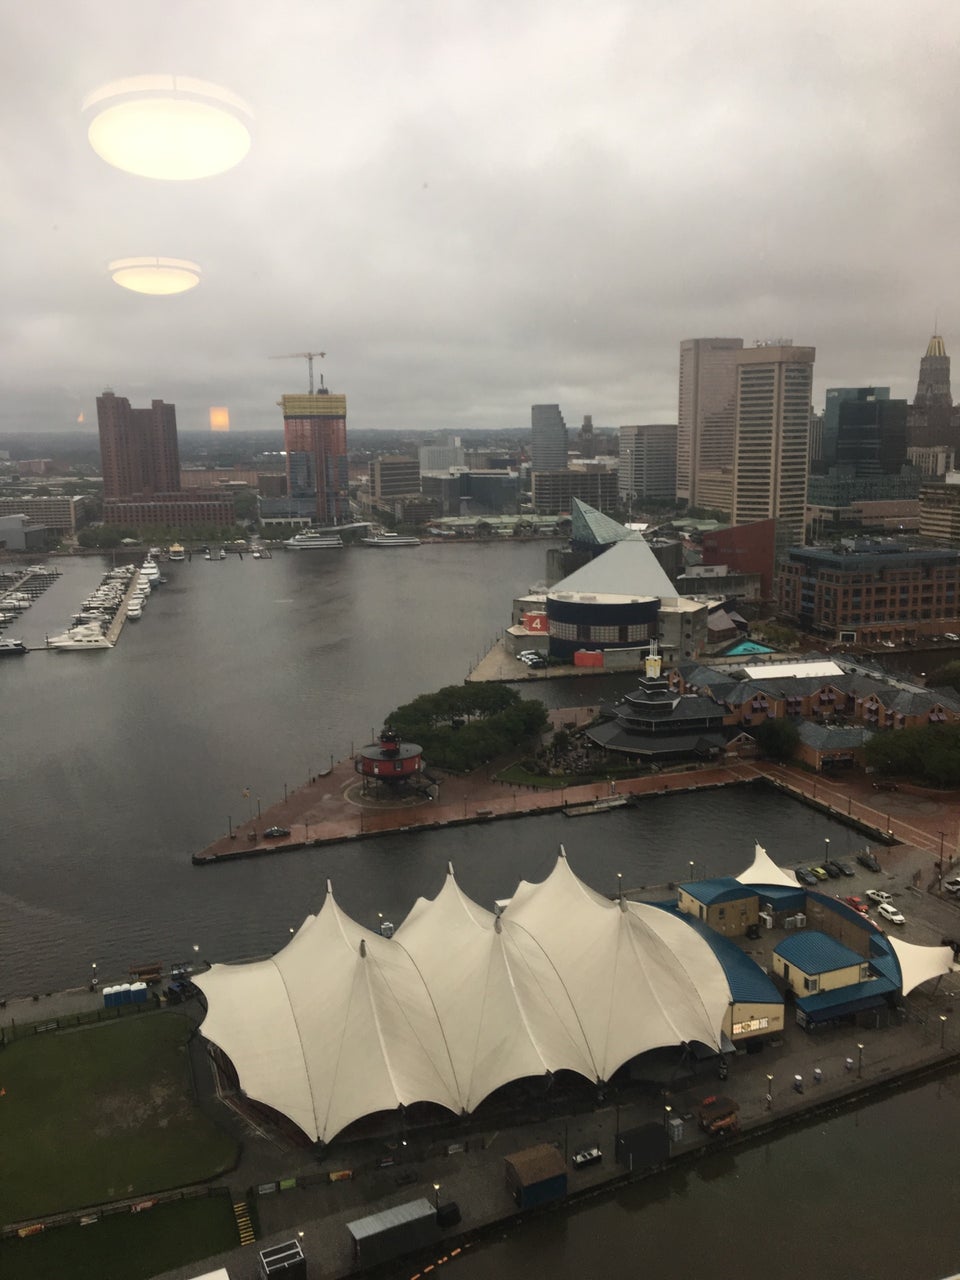 Photo of Baltimore Marriott Waterfront